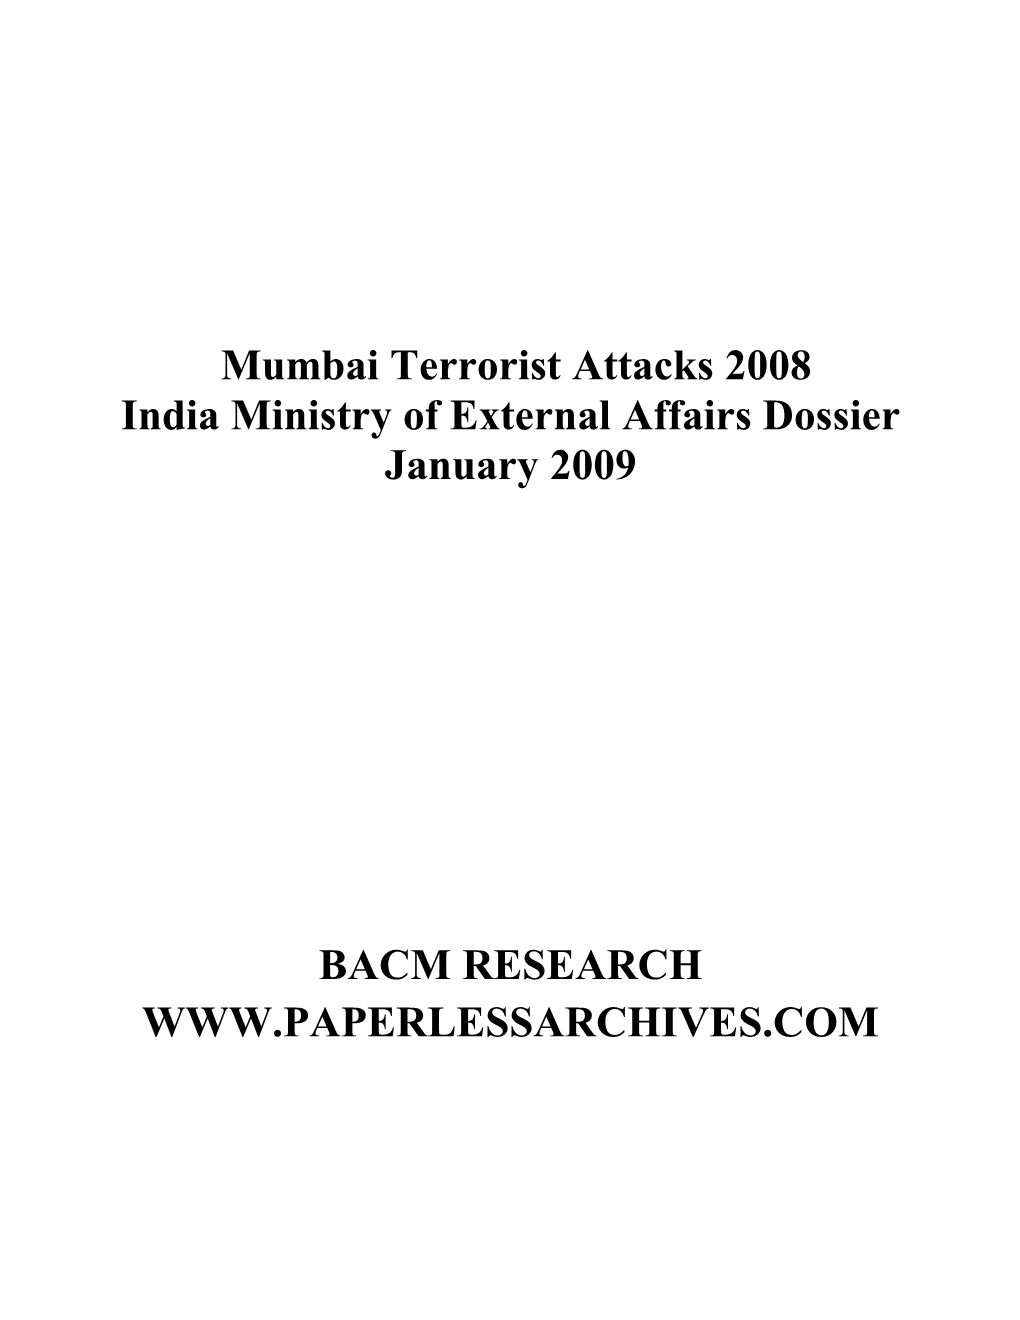 Mumbai Terrorist Attacks 2008 India Ministry of External Affairs Dossier January 2009